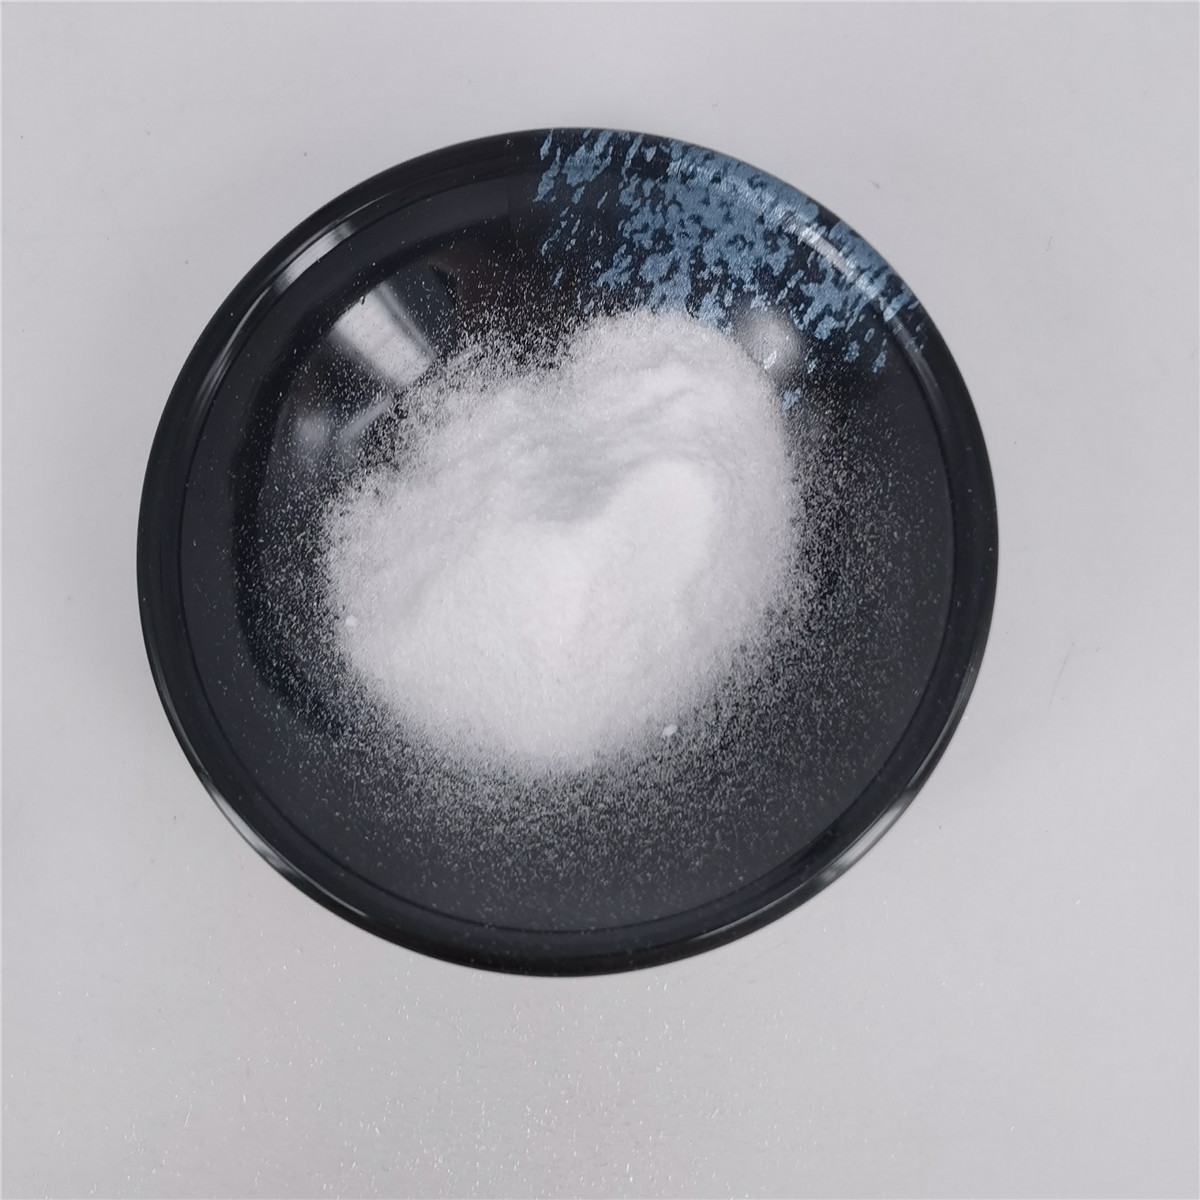 Best White Powder CAS NO 497-76-7 Beta Arbutin In Cosmetics wholesale